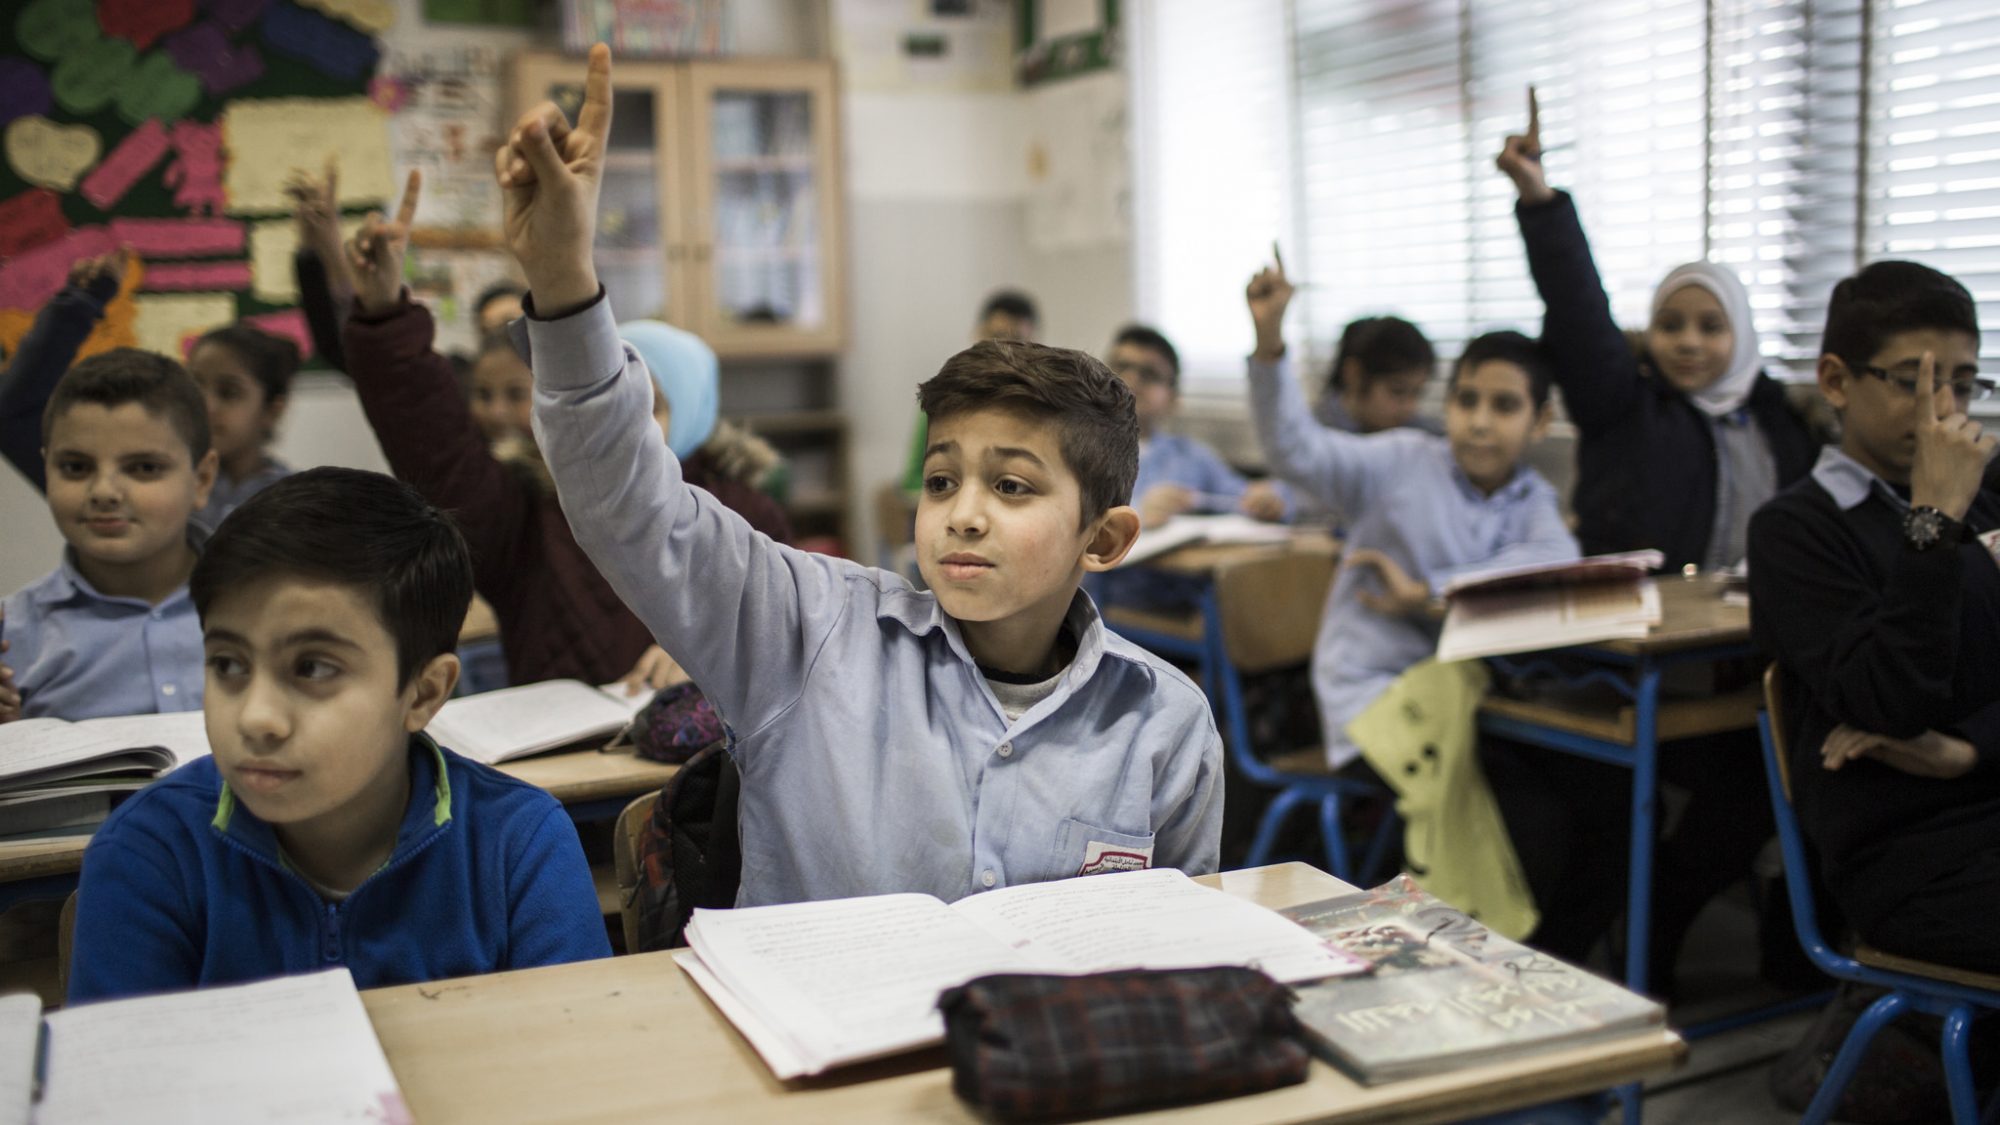 Students in Turkey raising their hands.